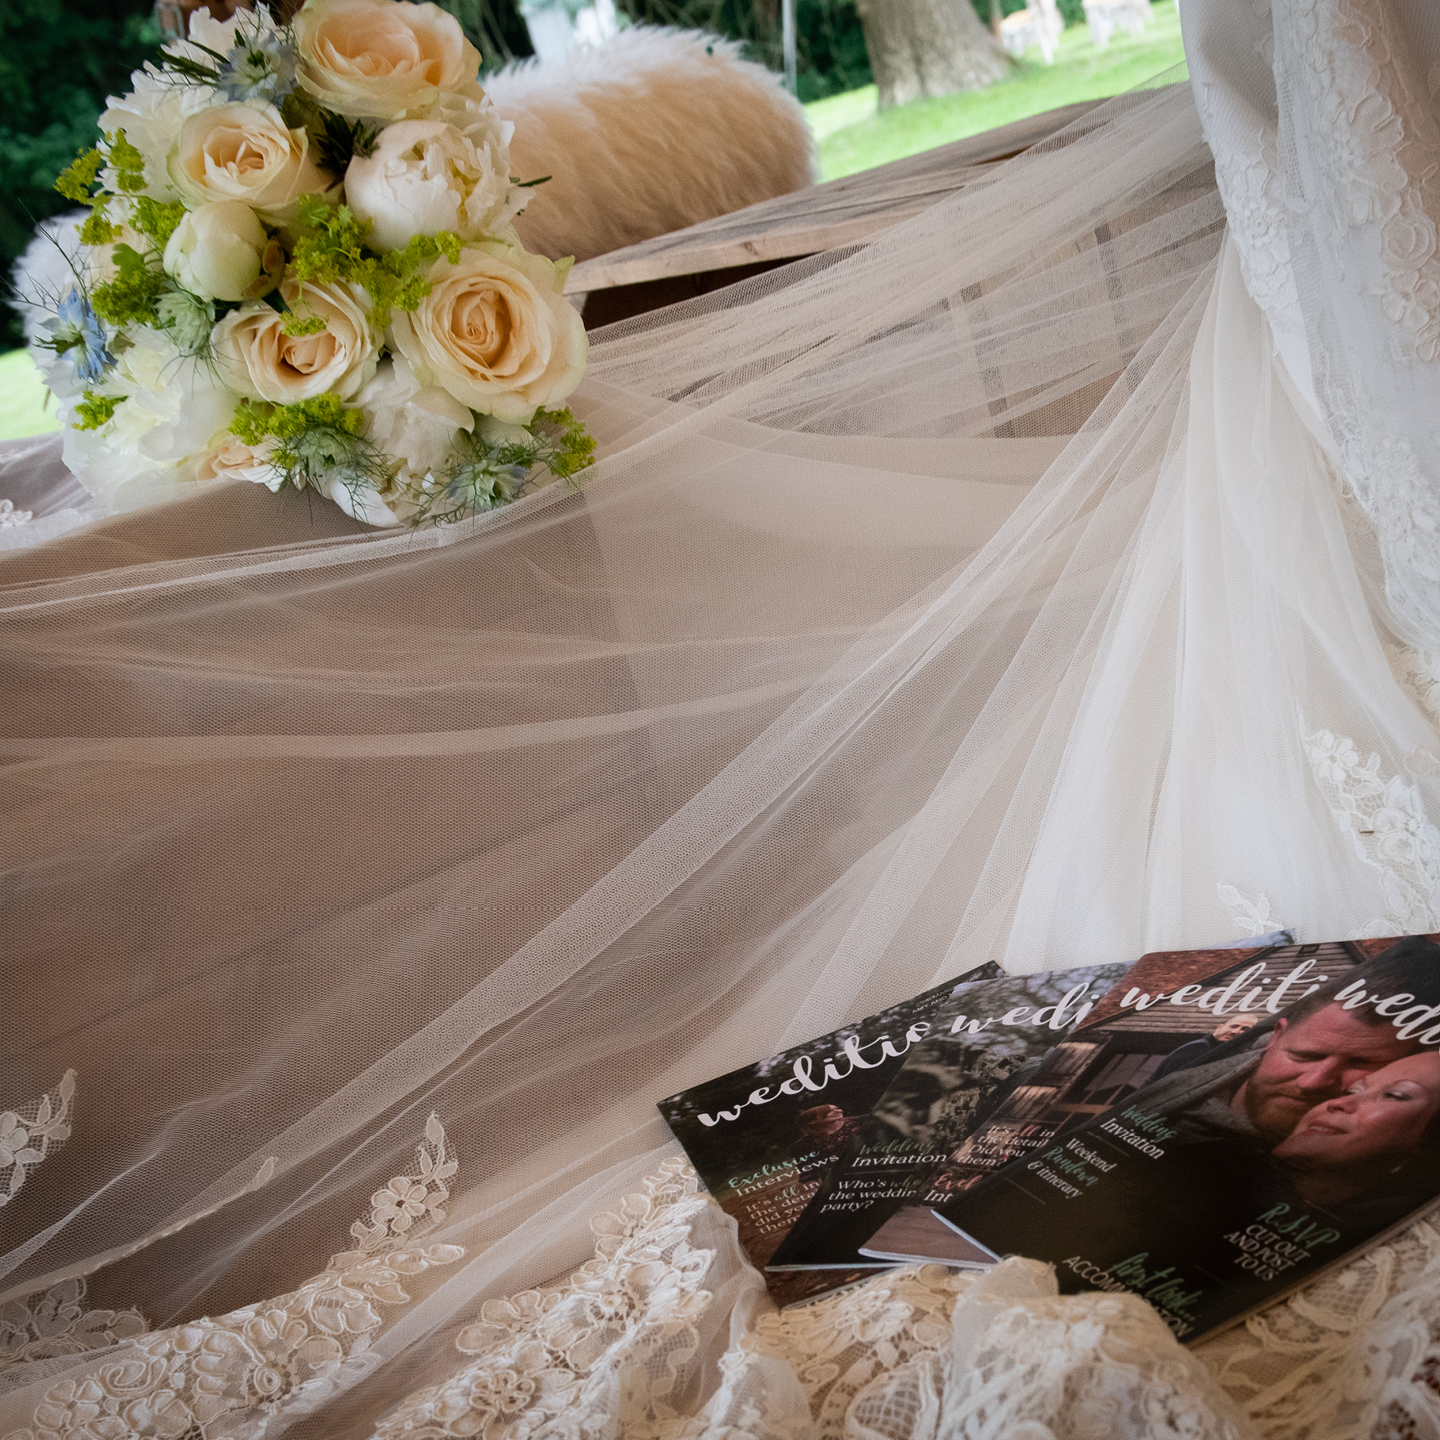 Surrey wedfest, wedition, wedding festival bride